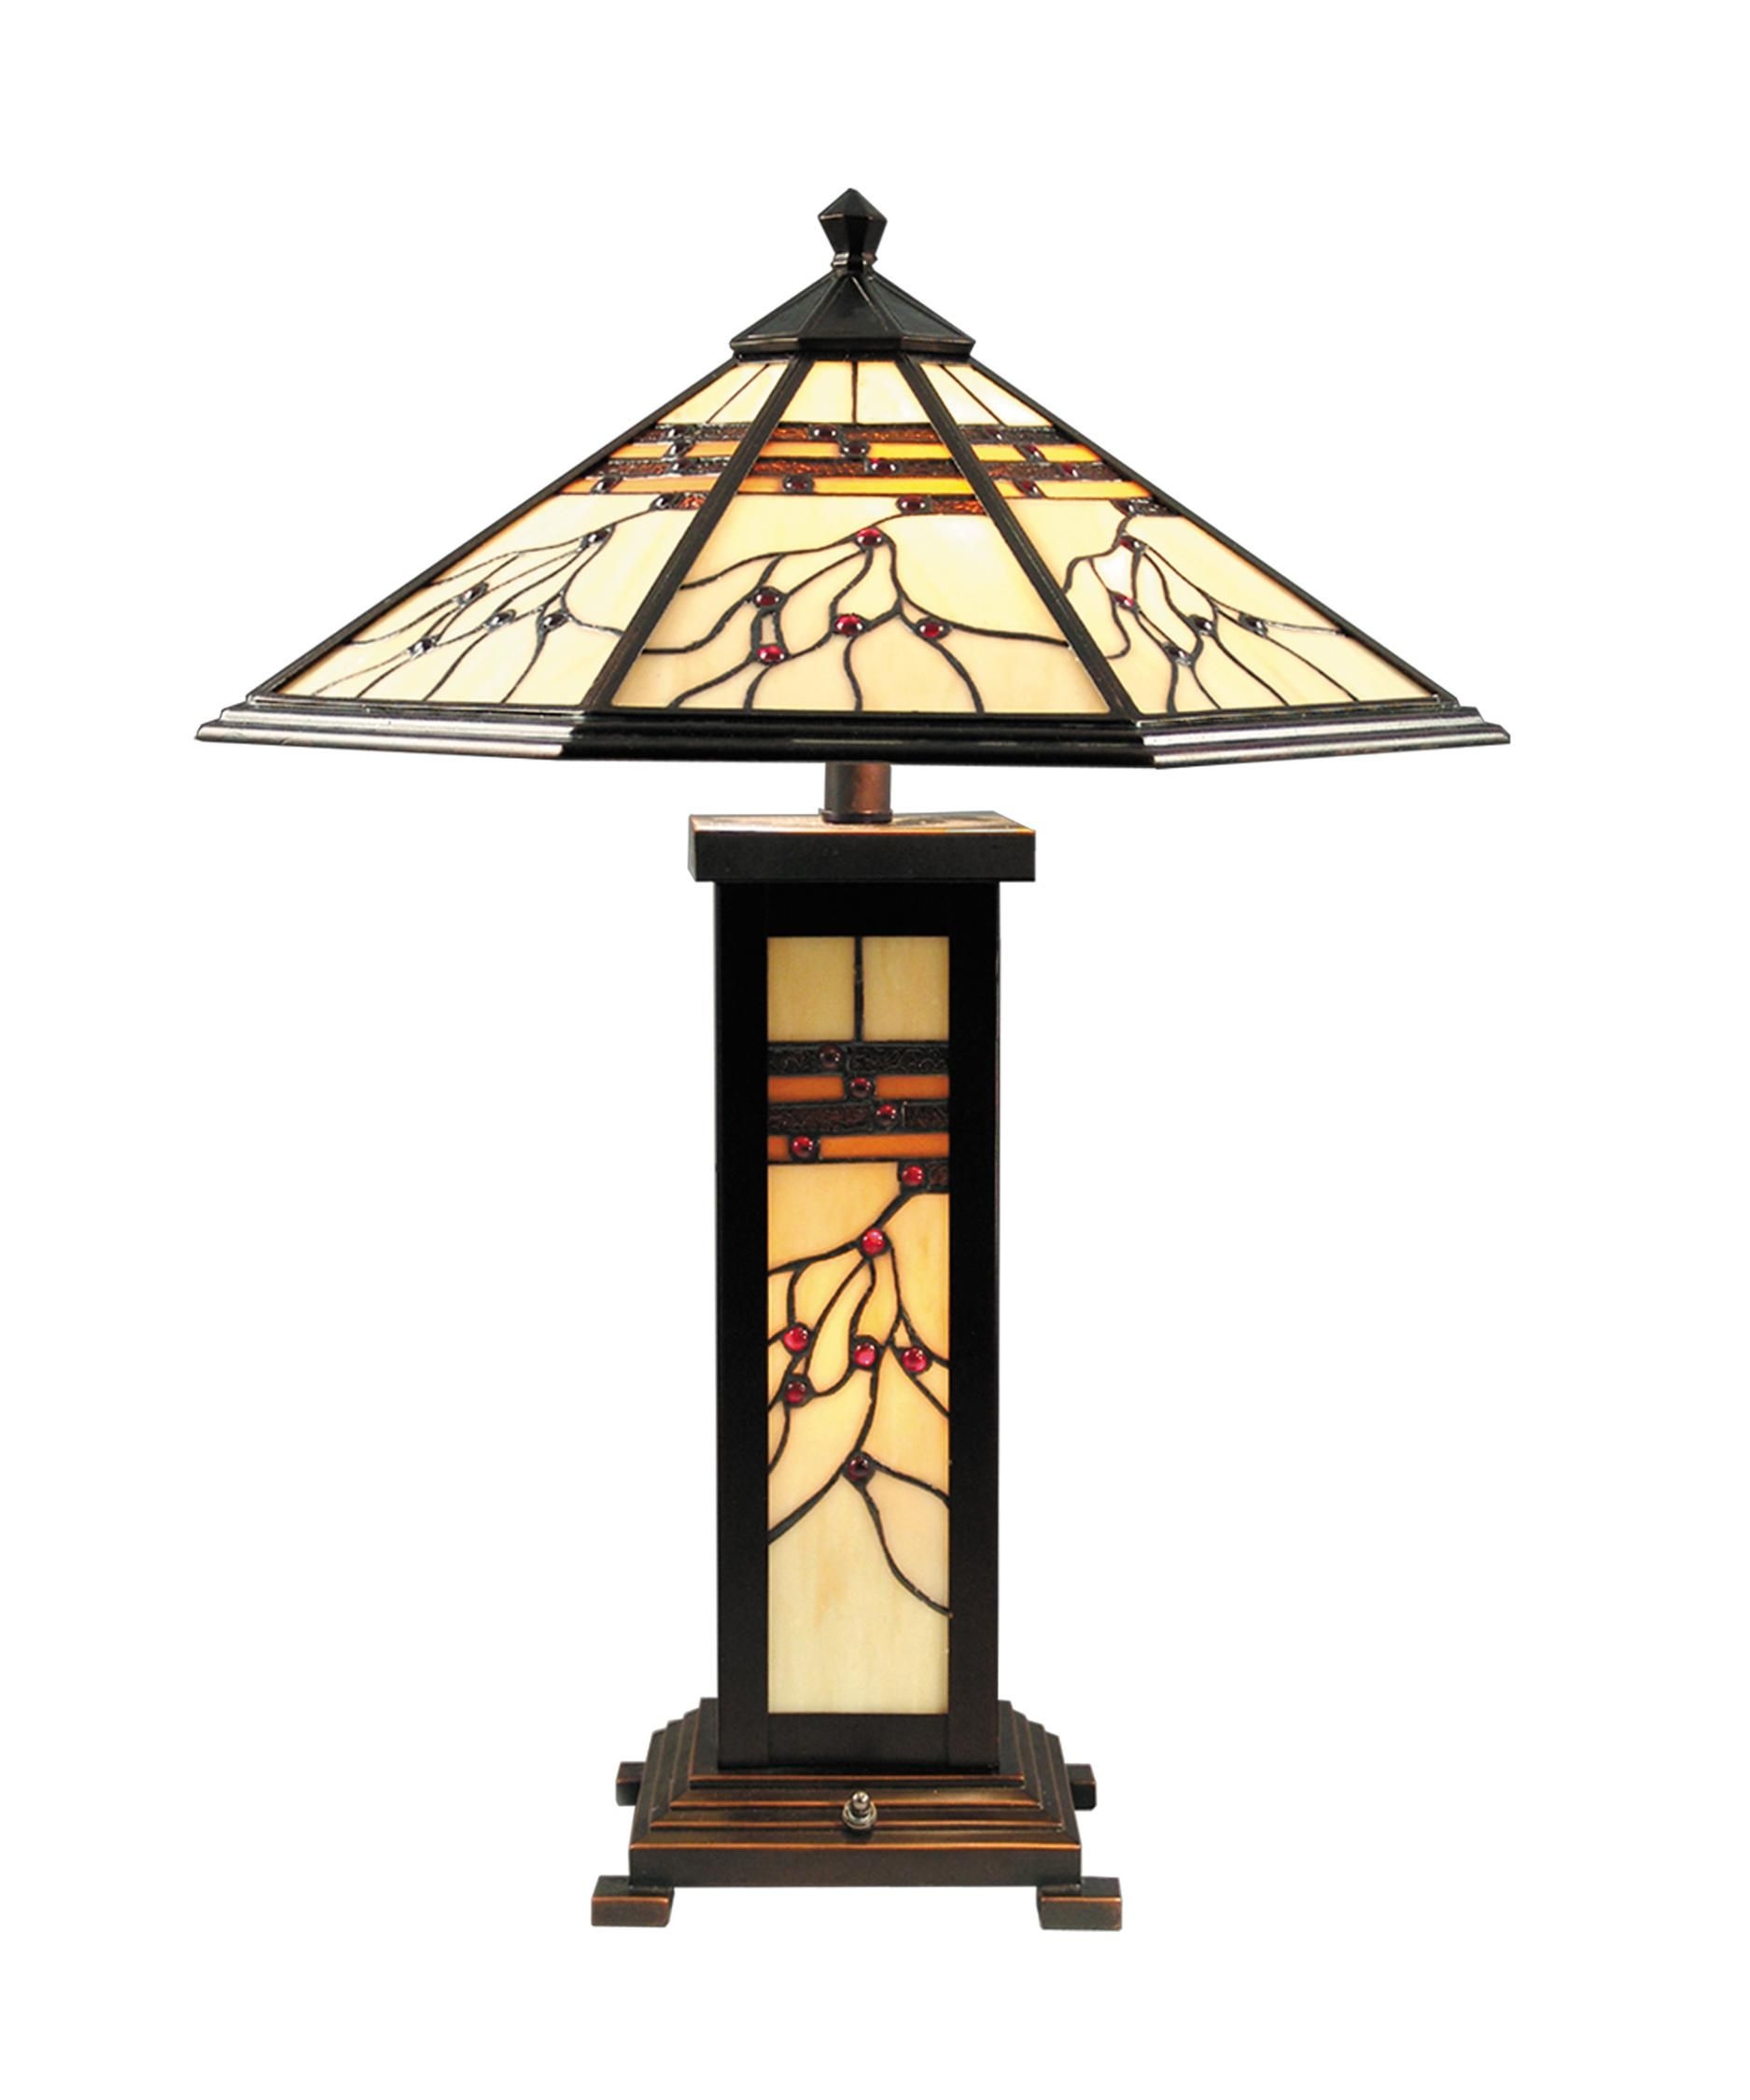 Tiffany style night light lamp 13